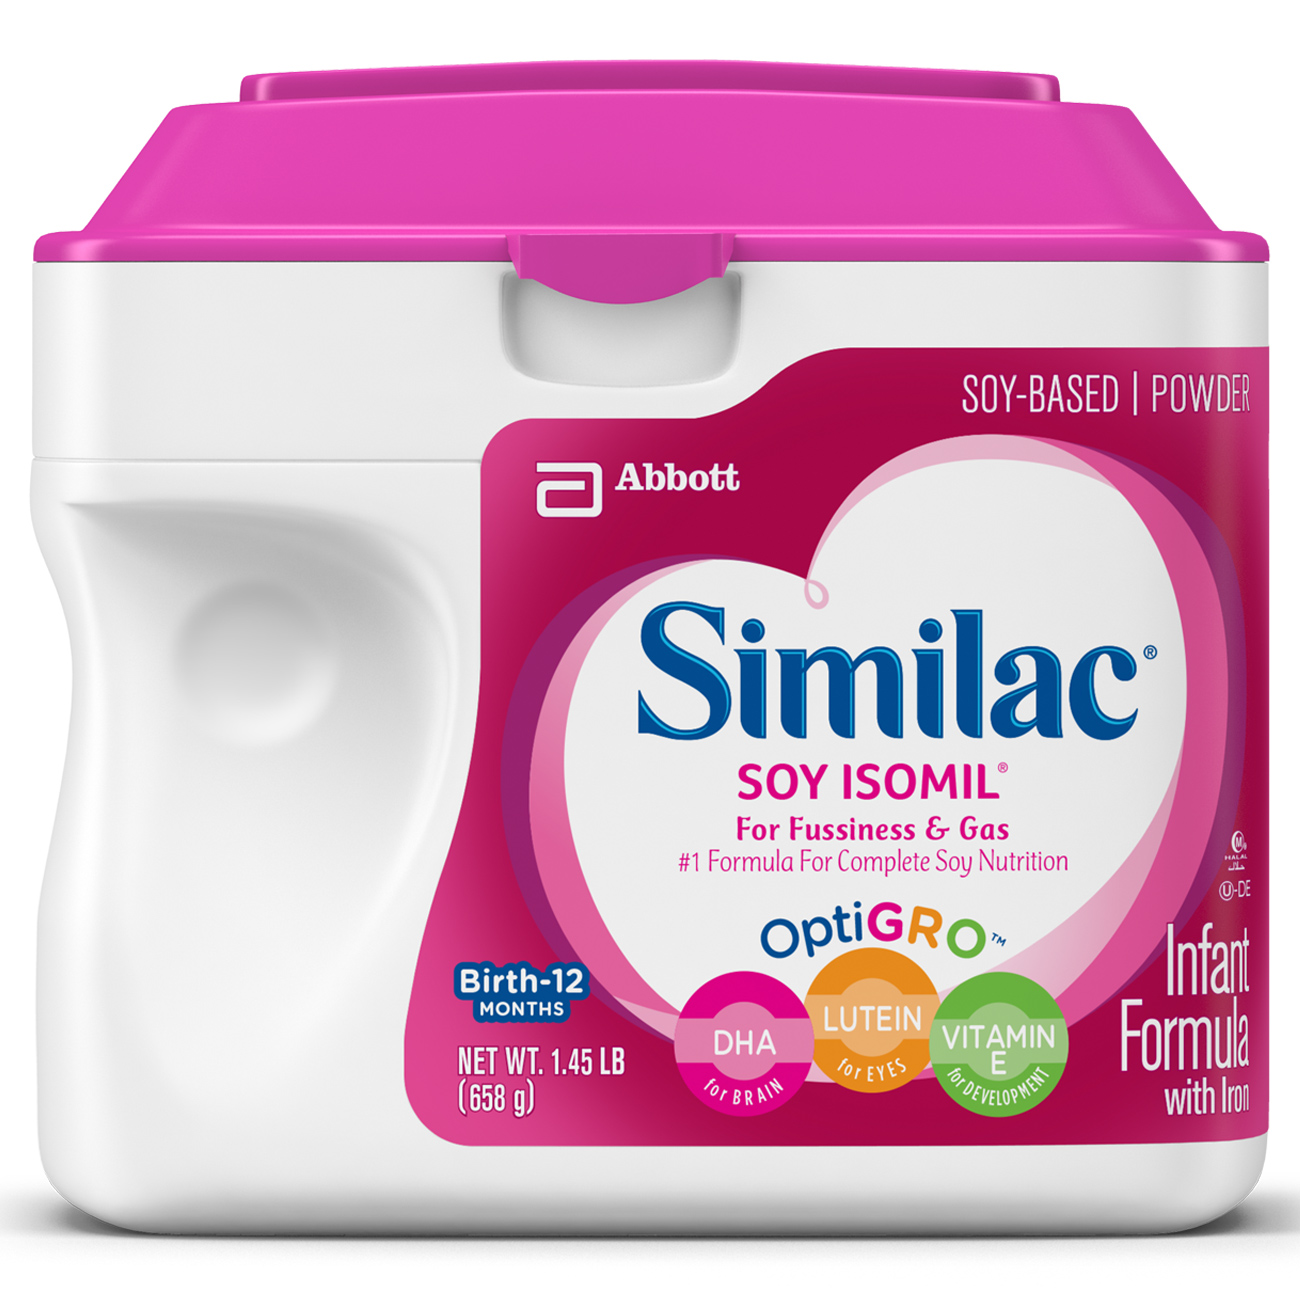 Similac Soy Isomil Powder Infant Formula, 1.45 lb-Tub, Pack of 6 - image 1 of 10